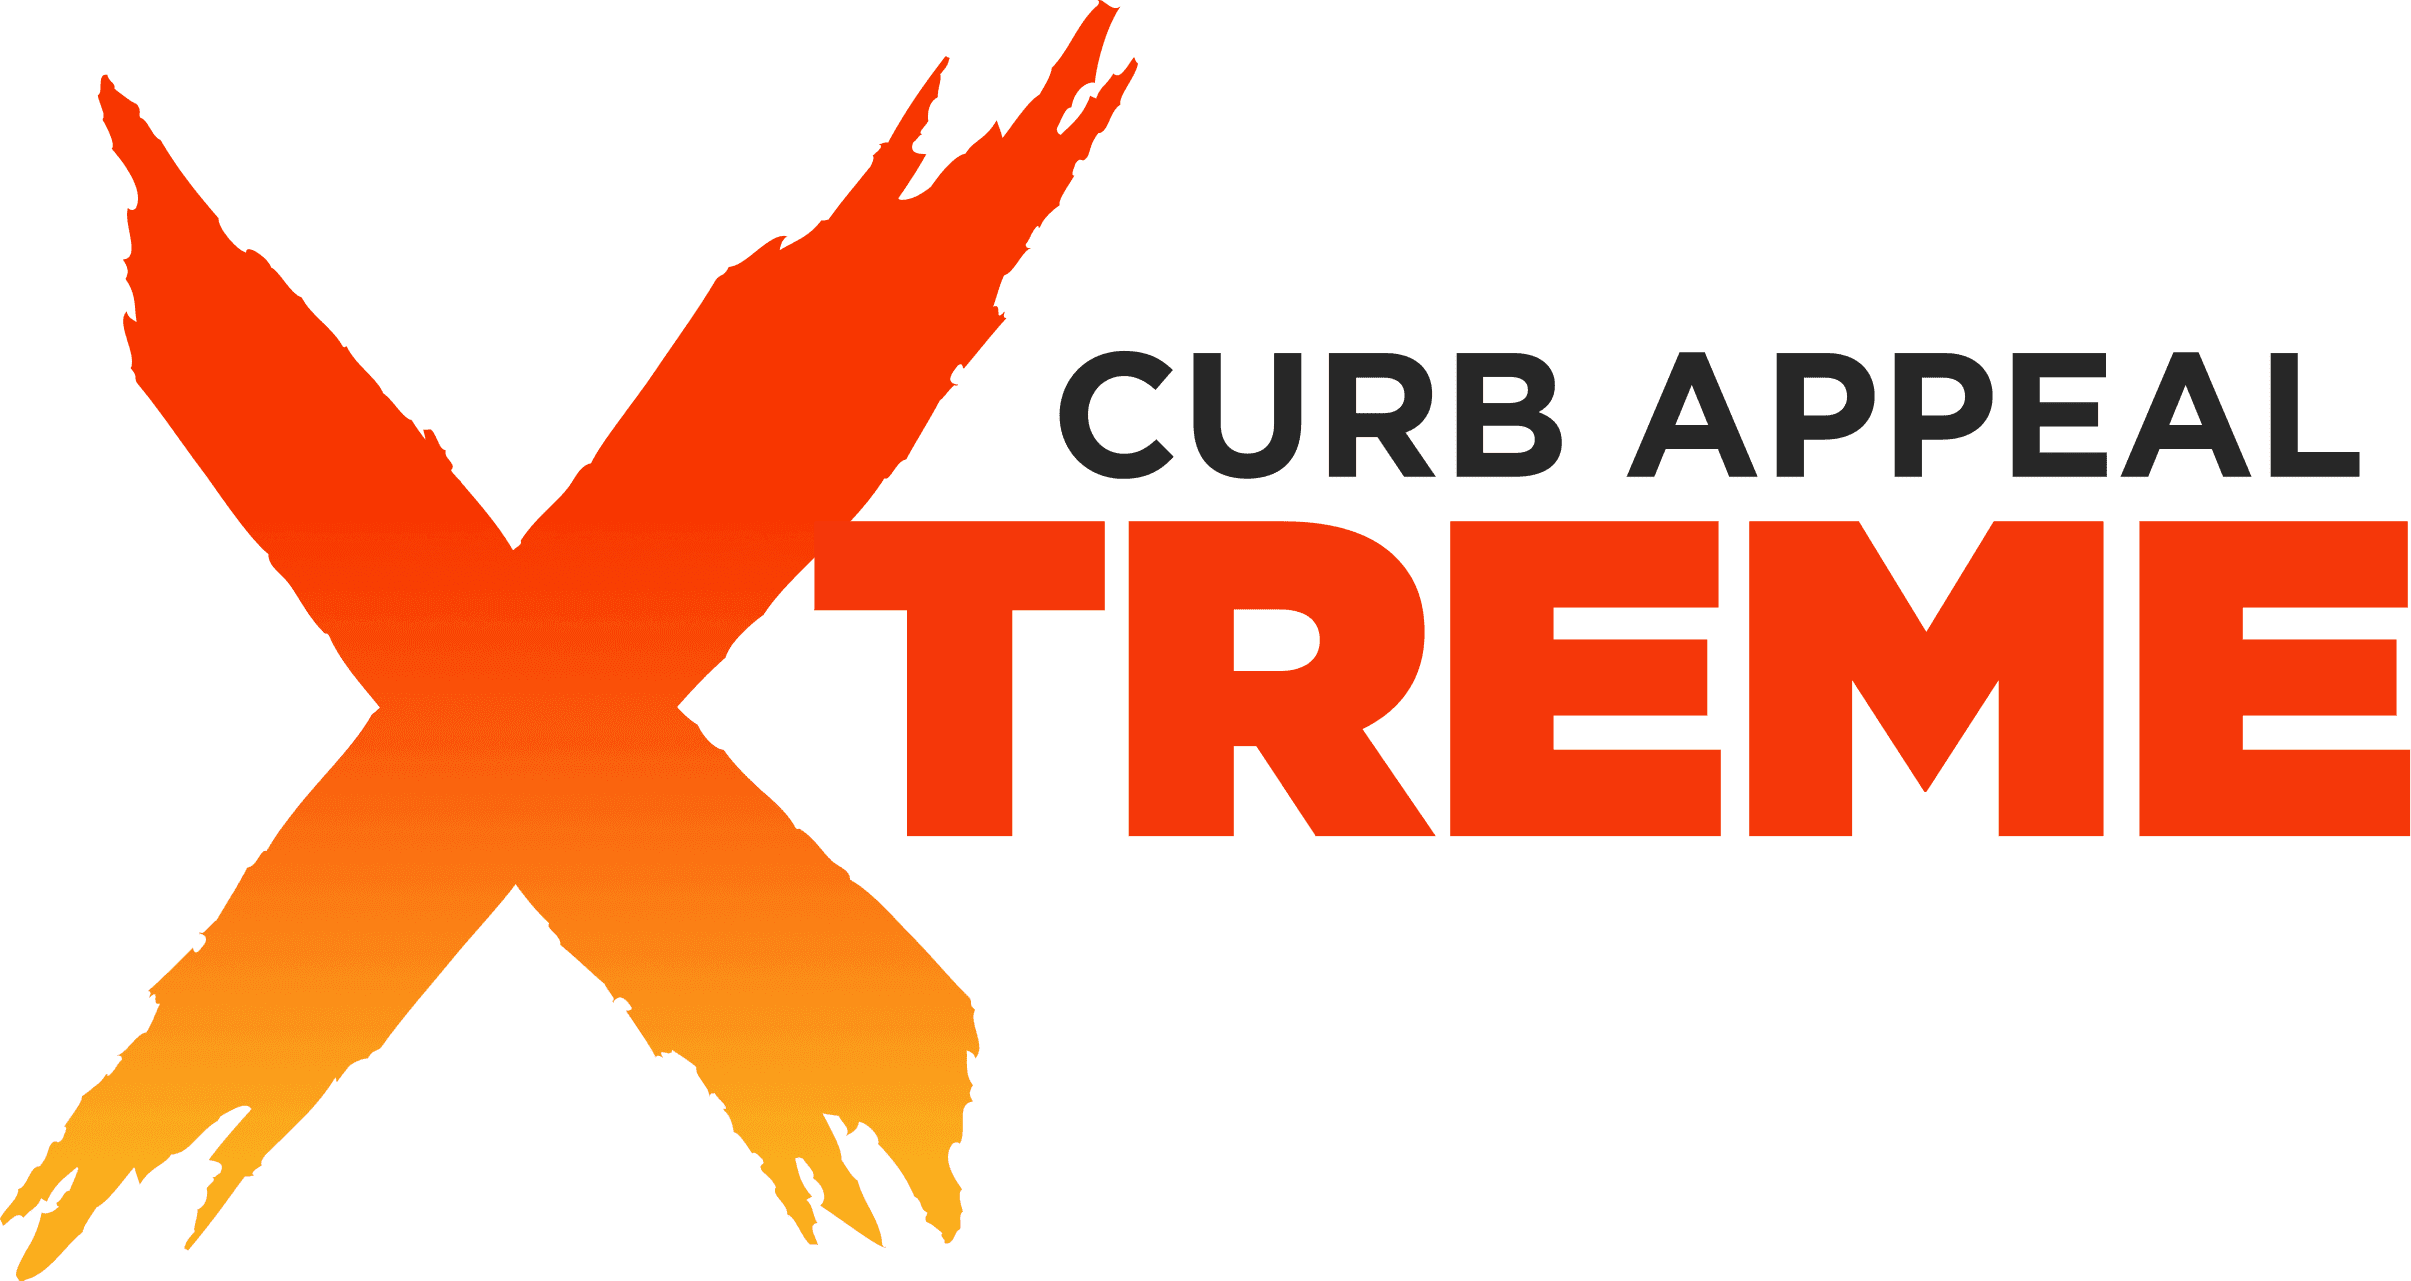 Curb Appeal Xtreme logo